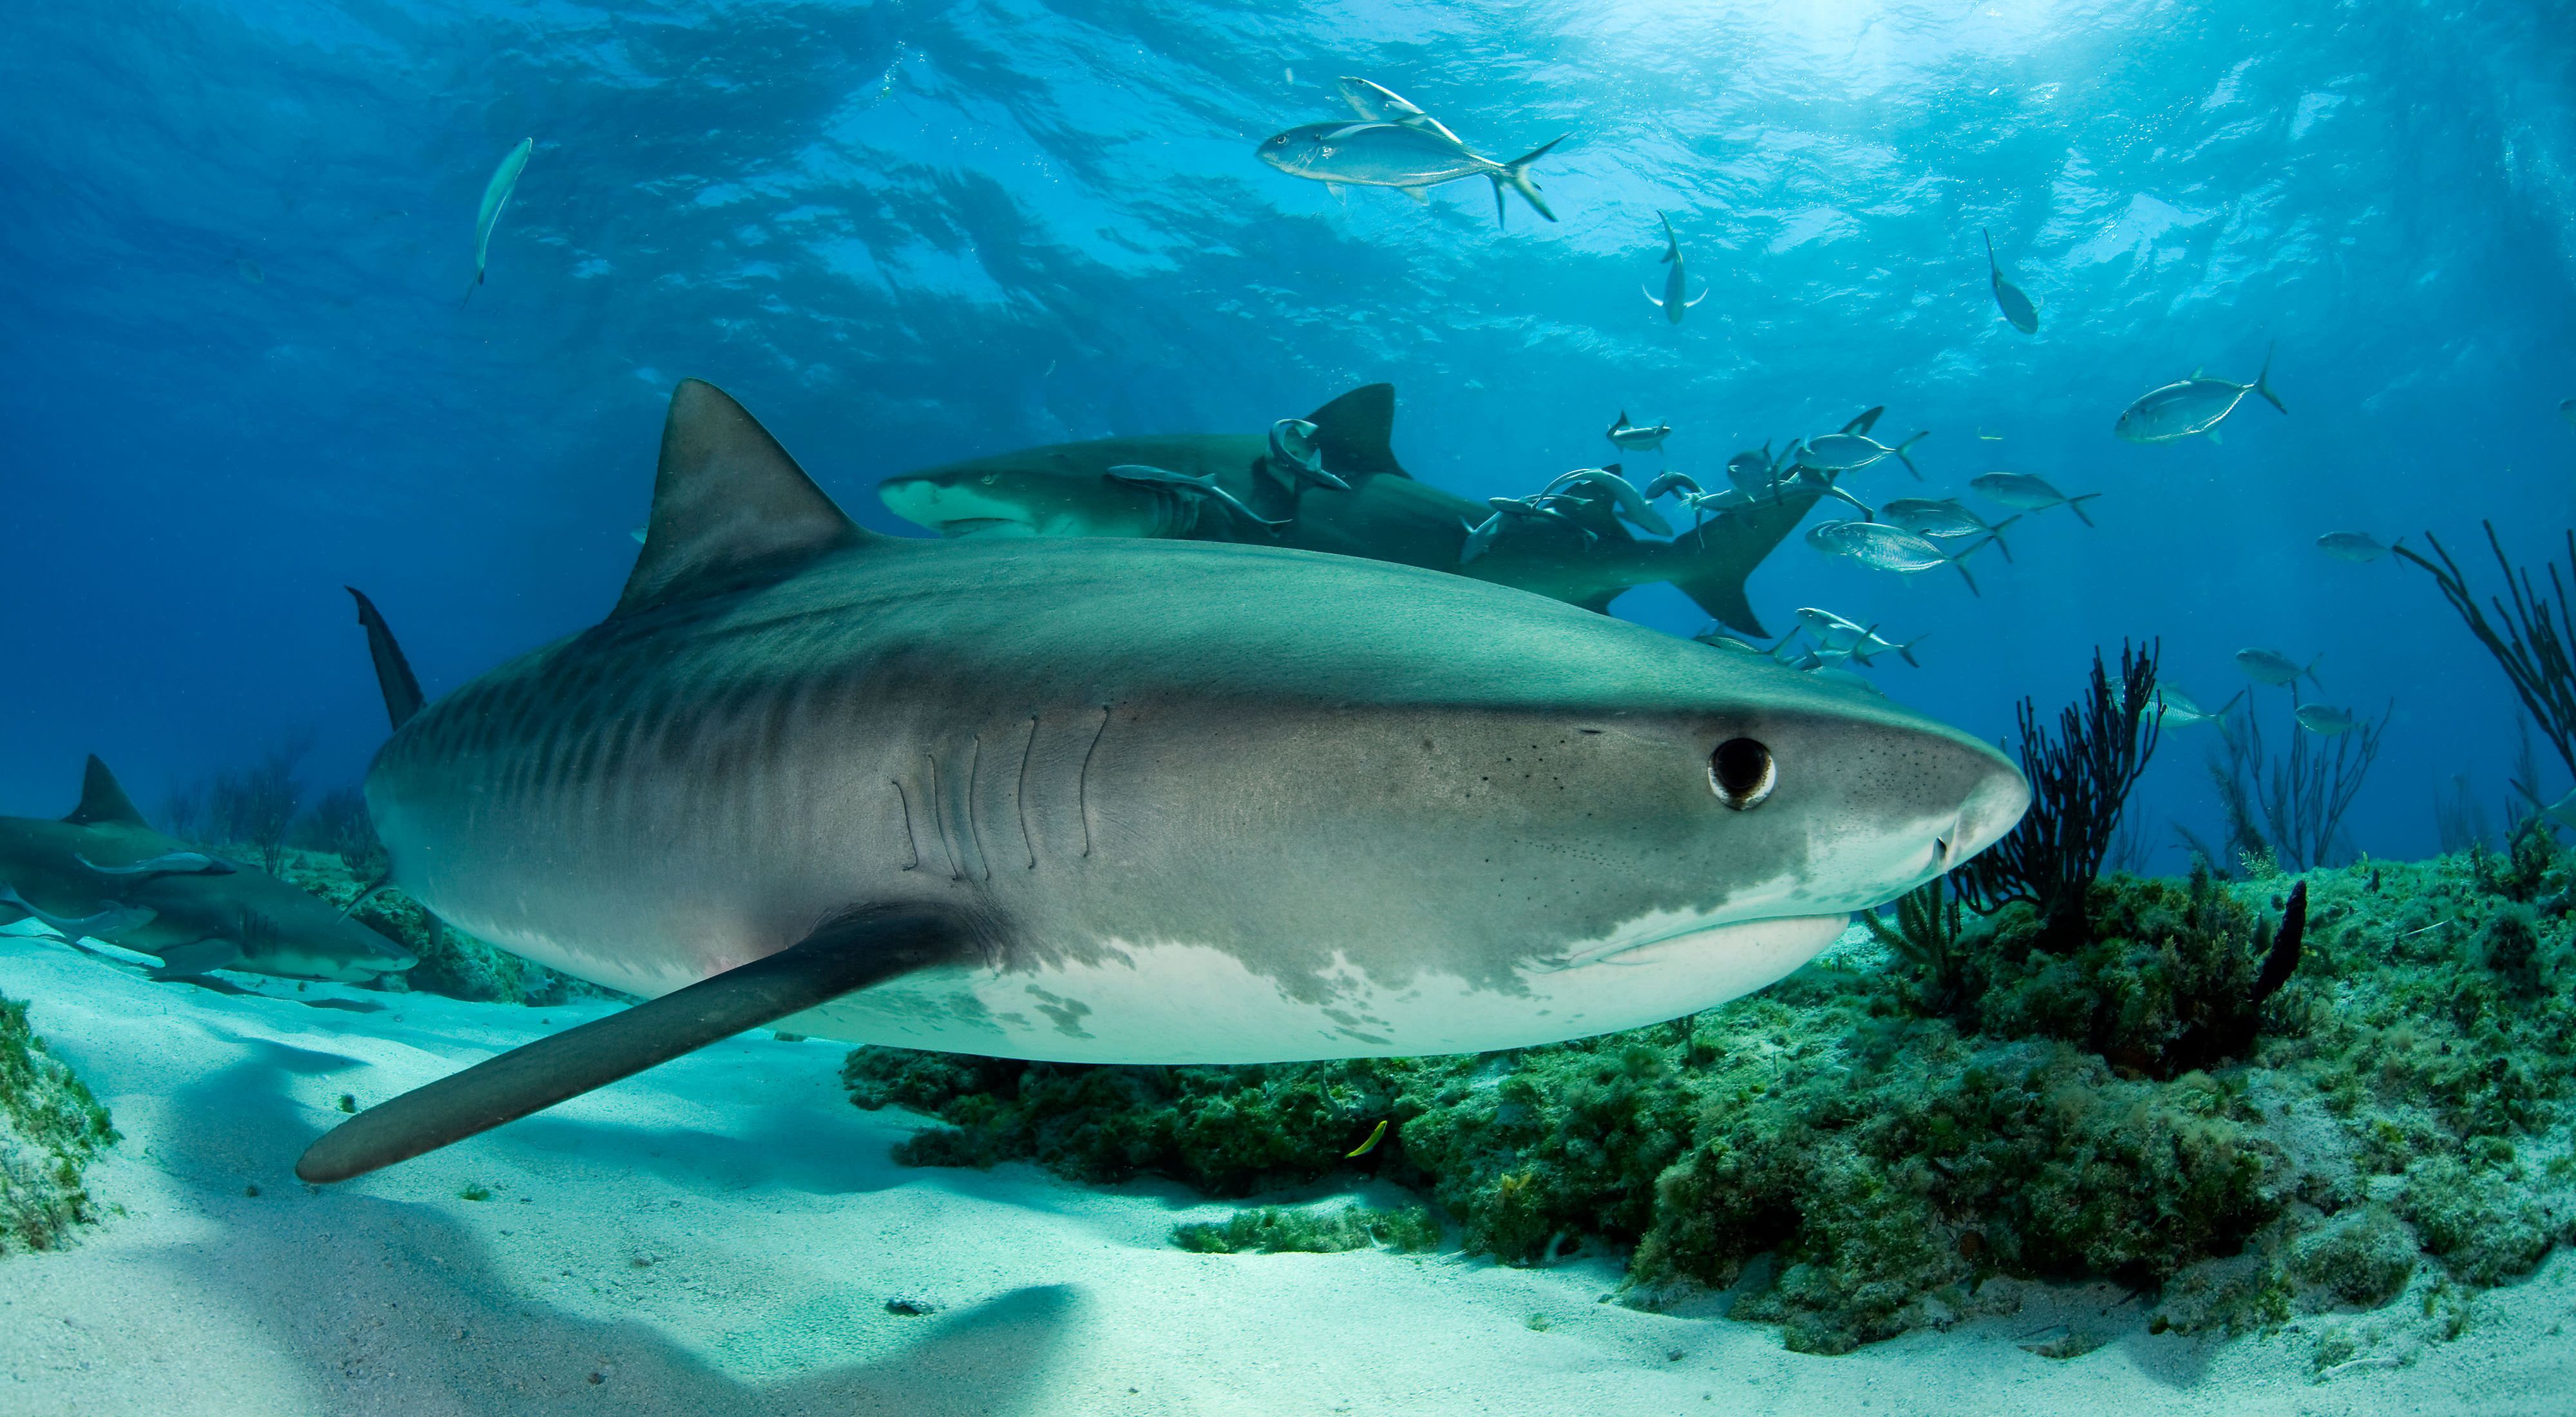 Detail Image Of A Shark Nomer 55